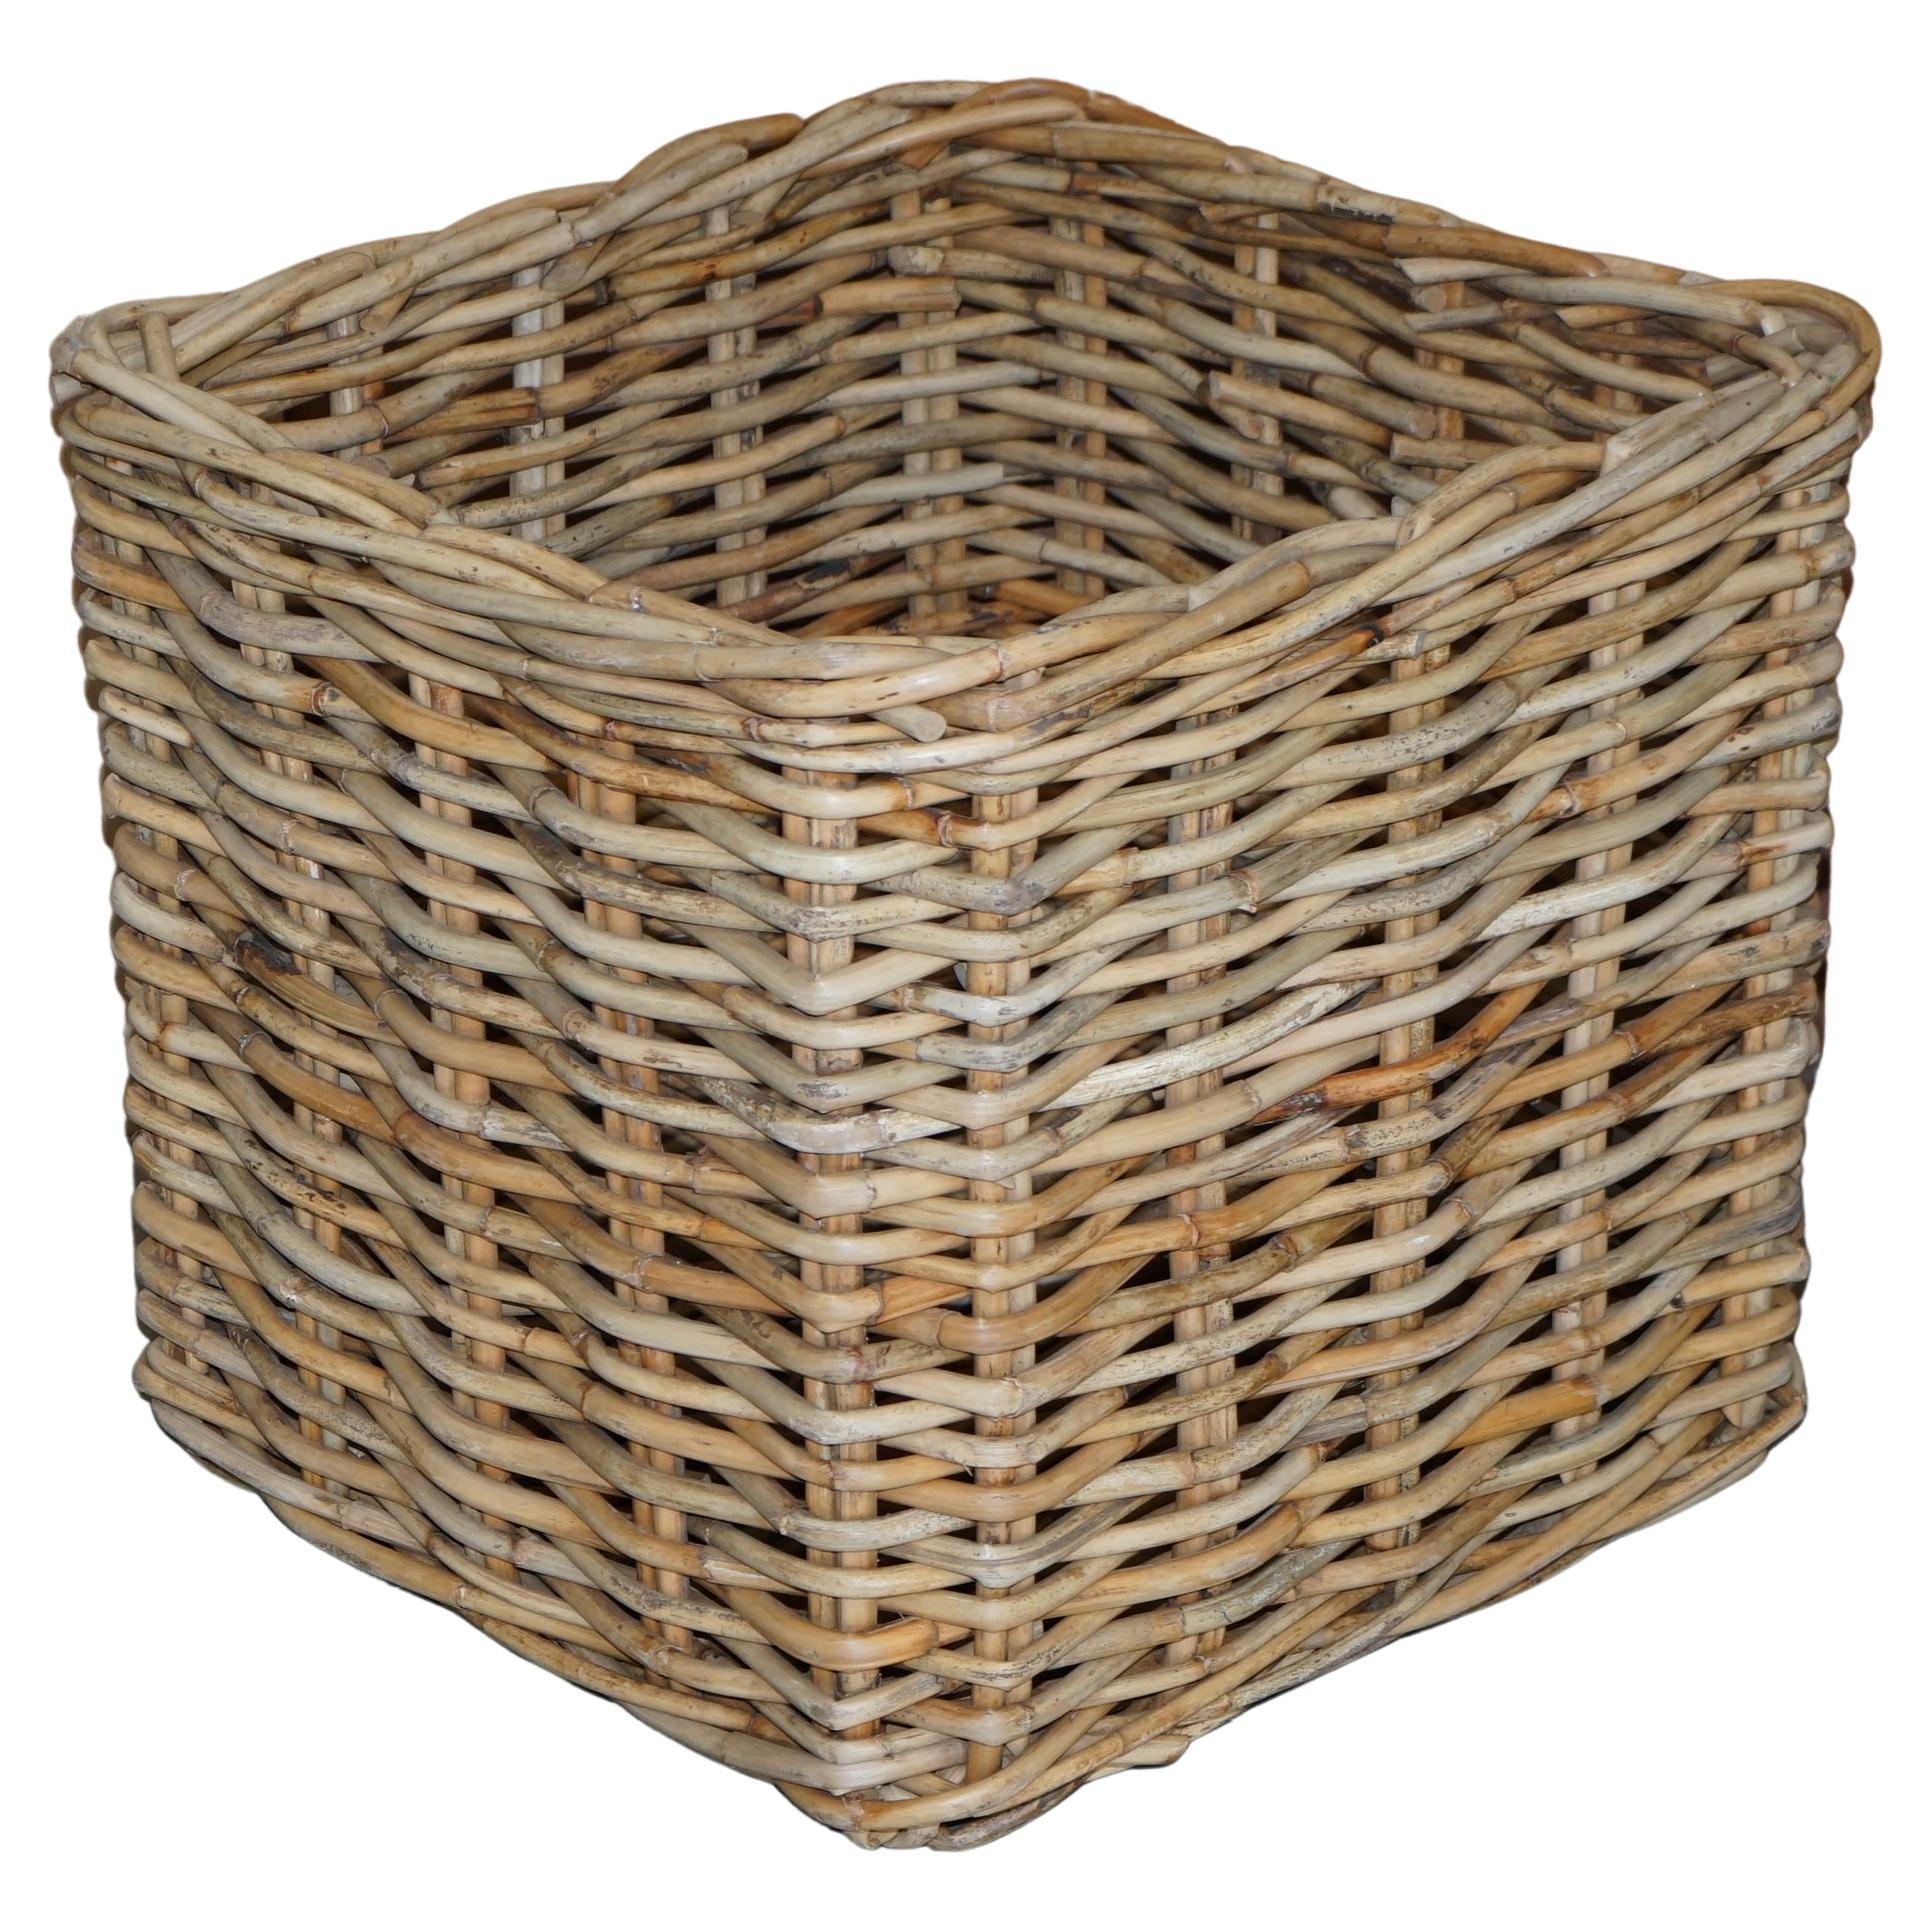 Stunning Huge Vintage Wicker Rattan Log or Linen Laundry Basket for Fabric Rolls